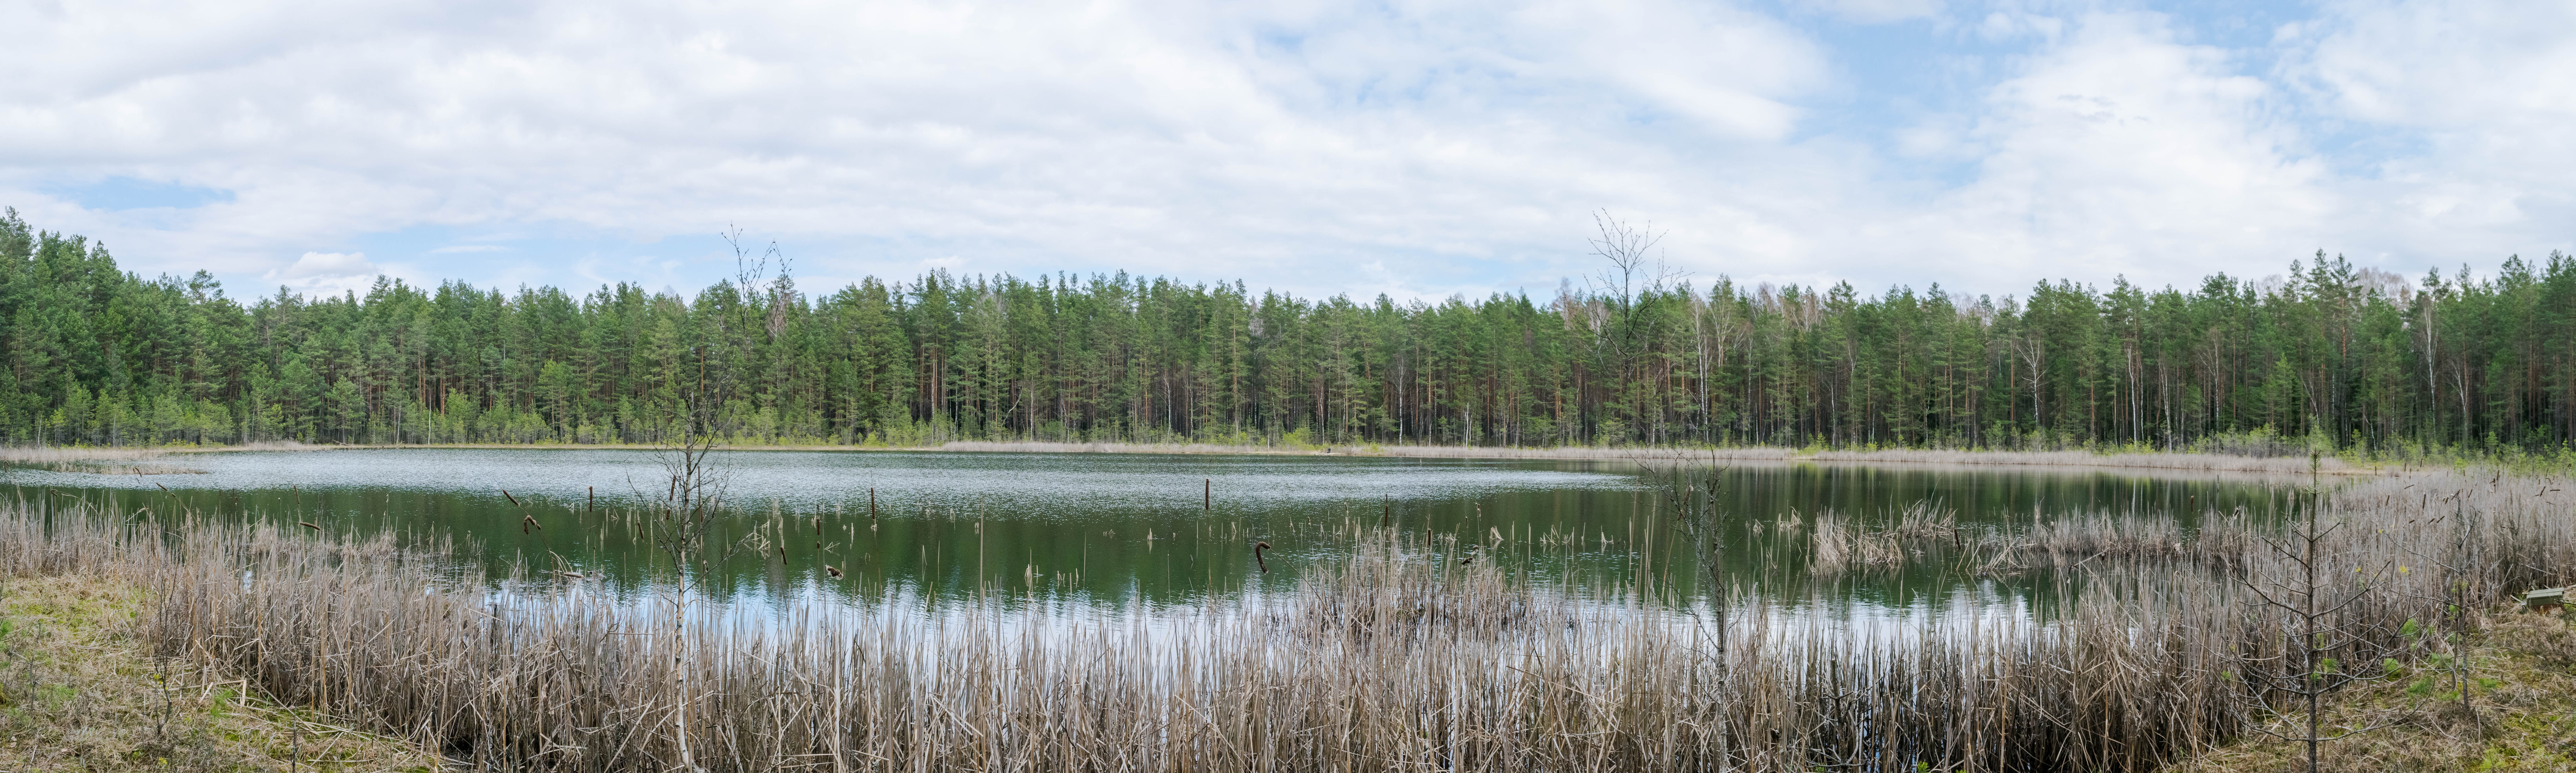 Озеро дикое Беларусь